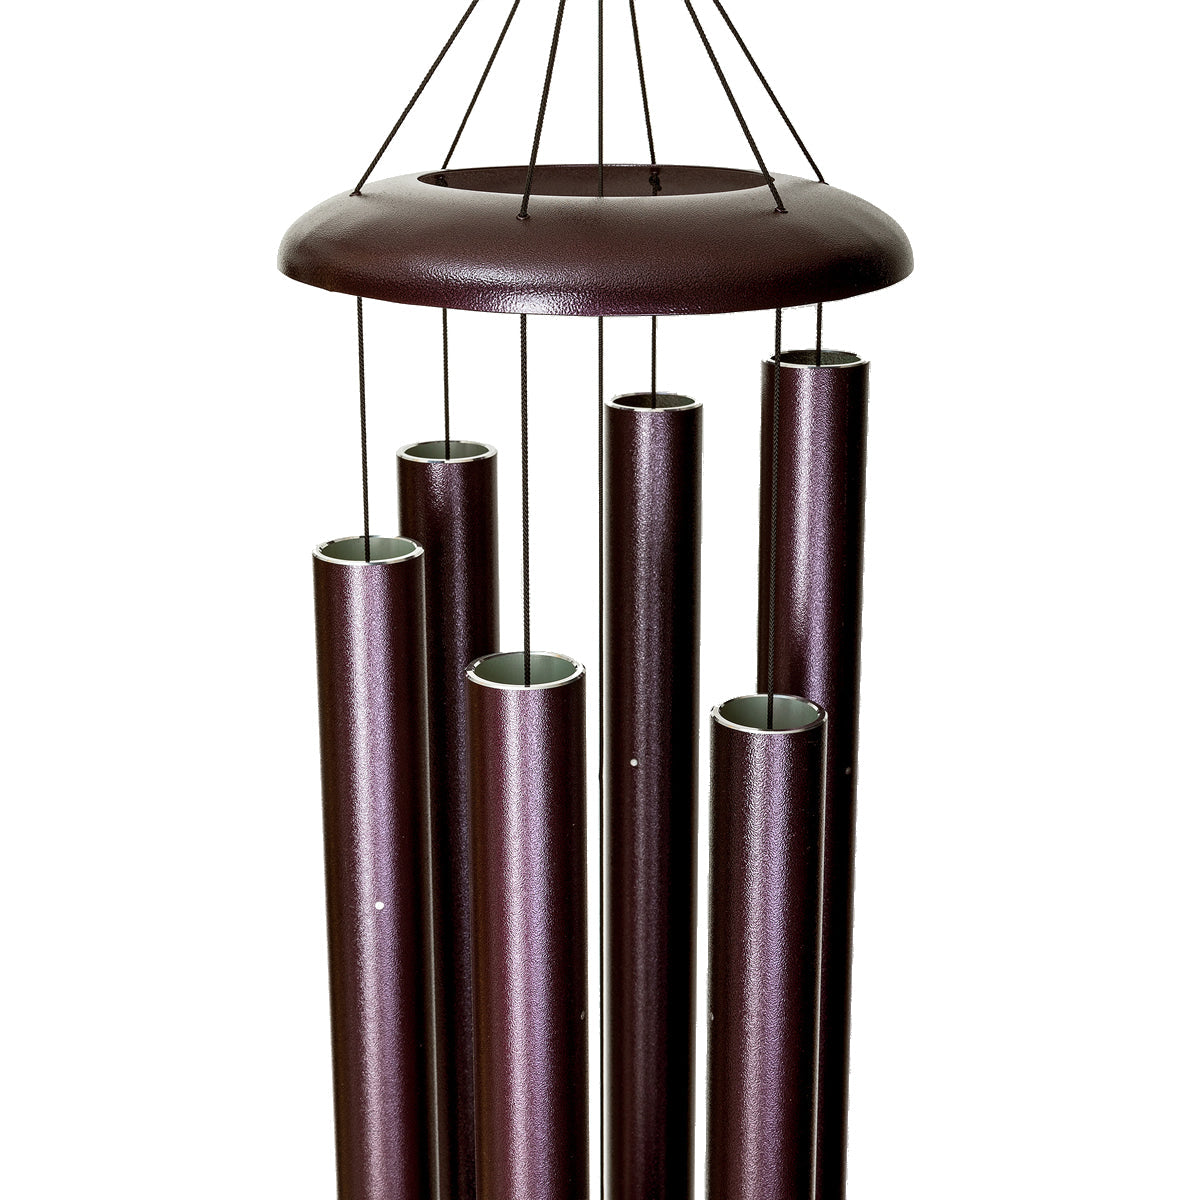 Corinthian Bells 65-inch Wind Chime - Plum